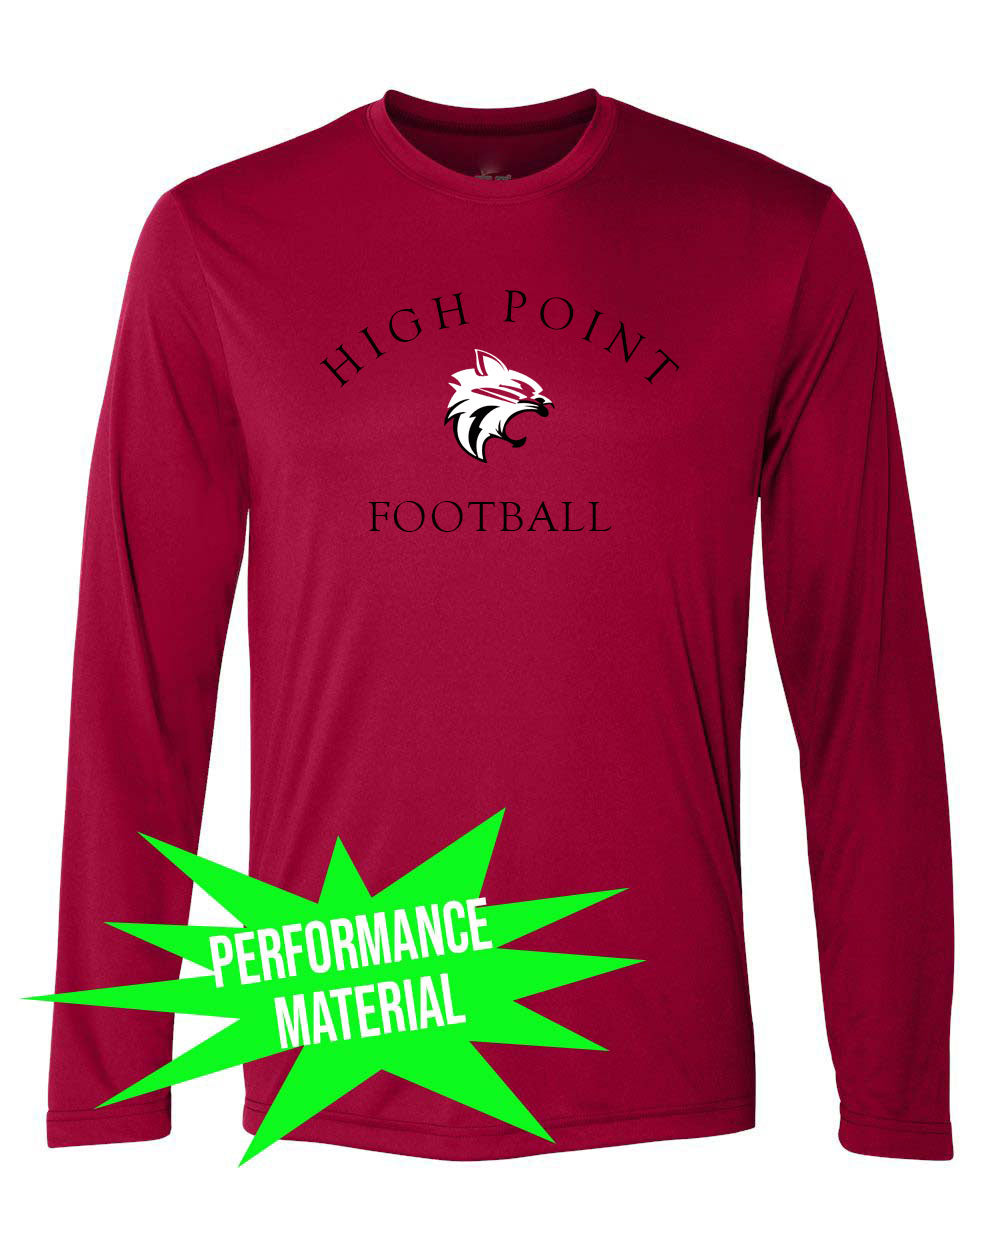 High Point Football Performance Material Design 3 Long Sleeve Shirt